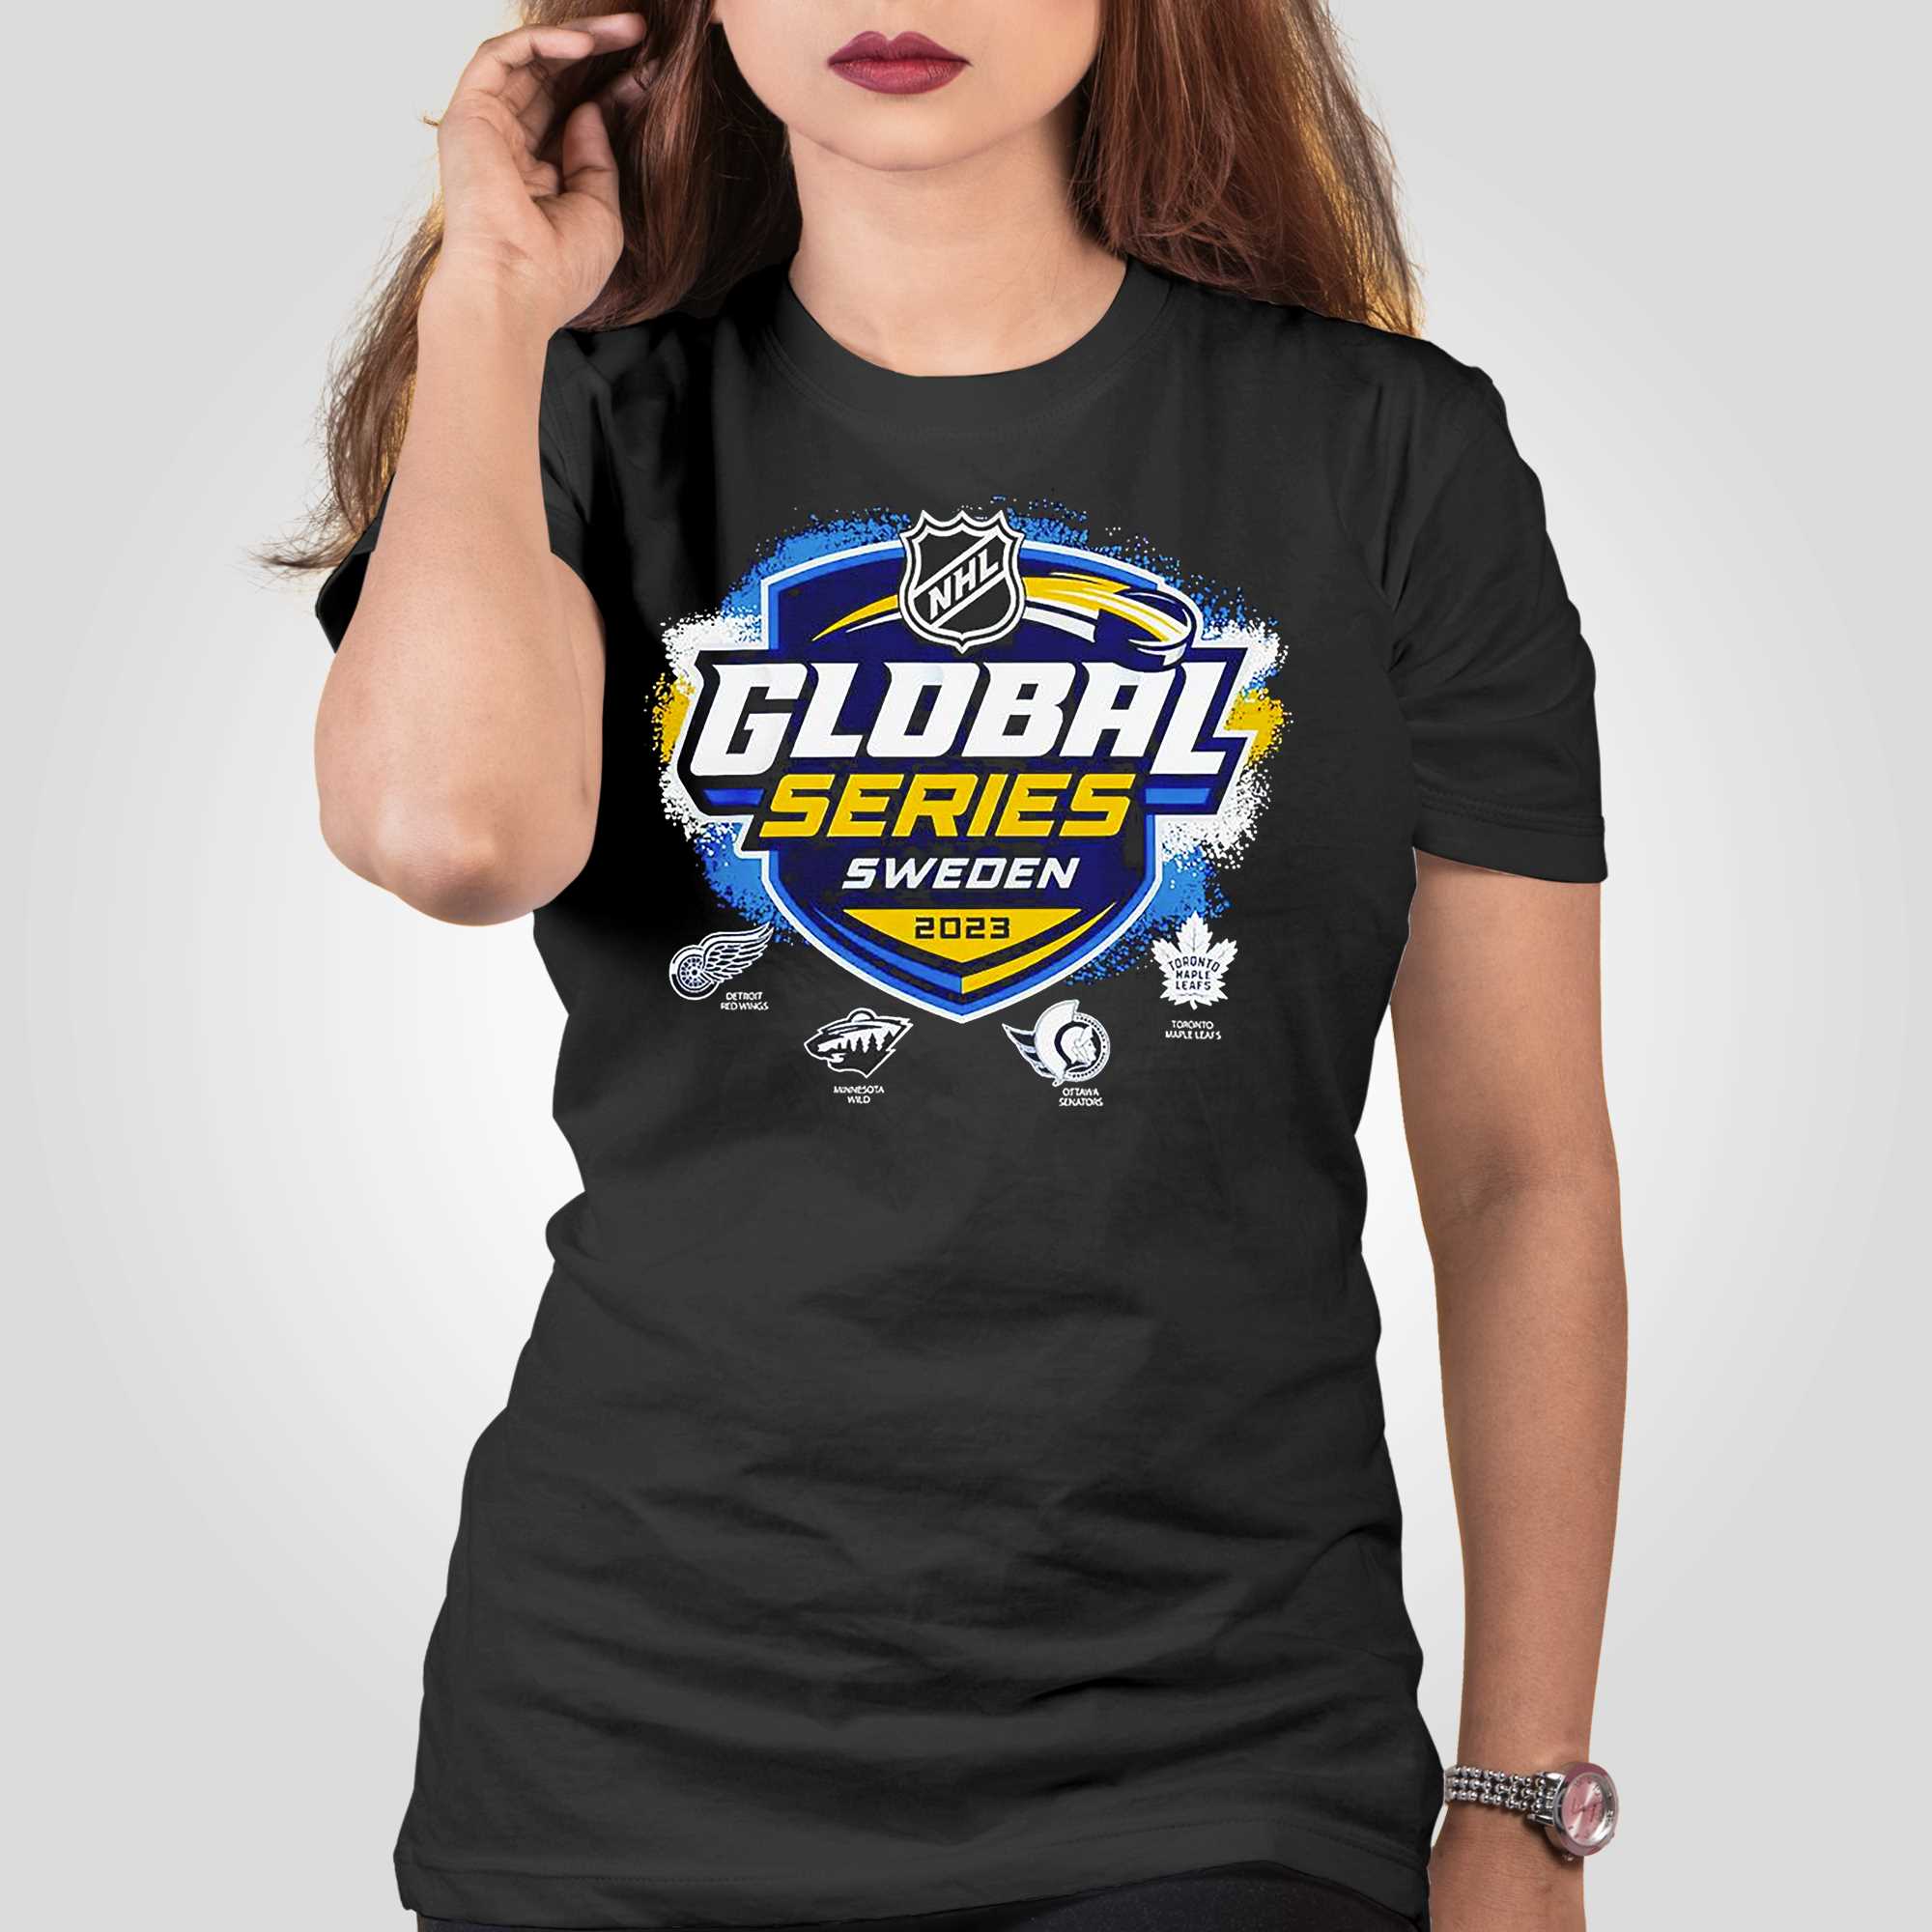 Nhl Global Series Sweden Shirt